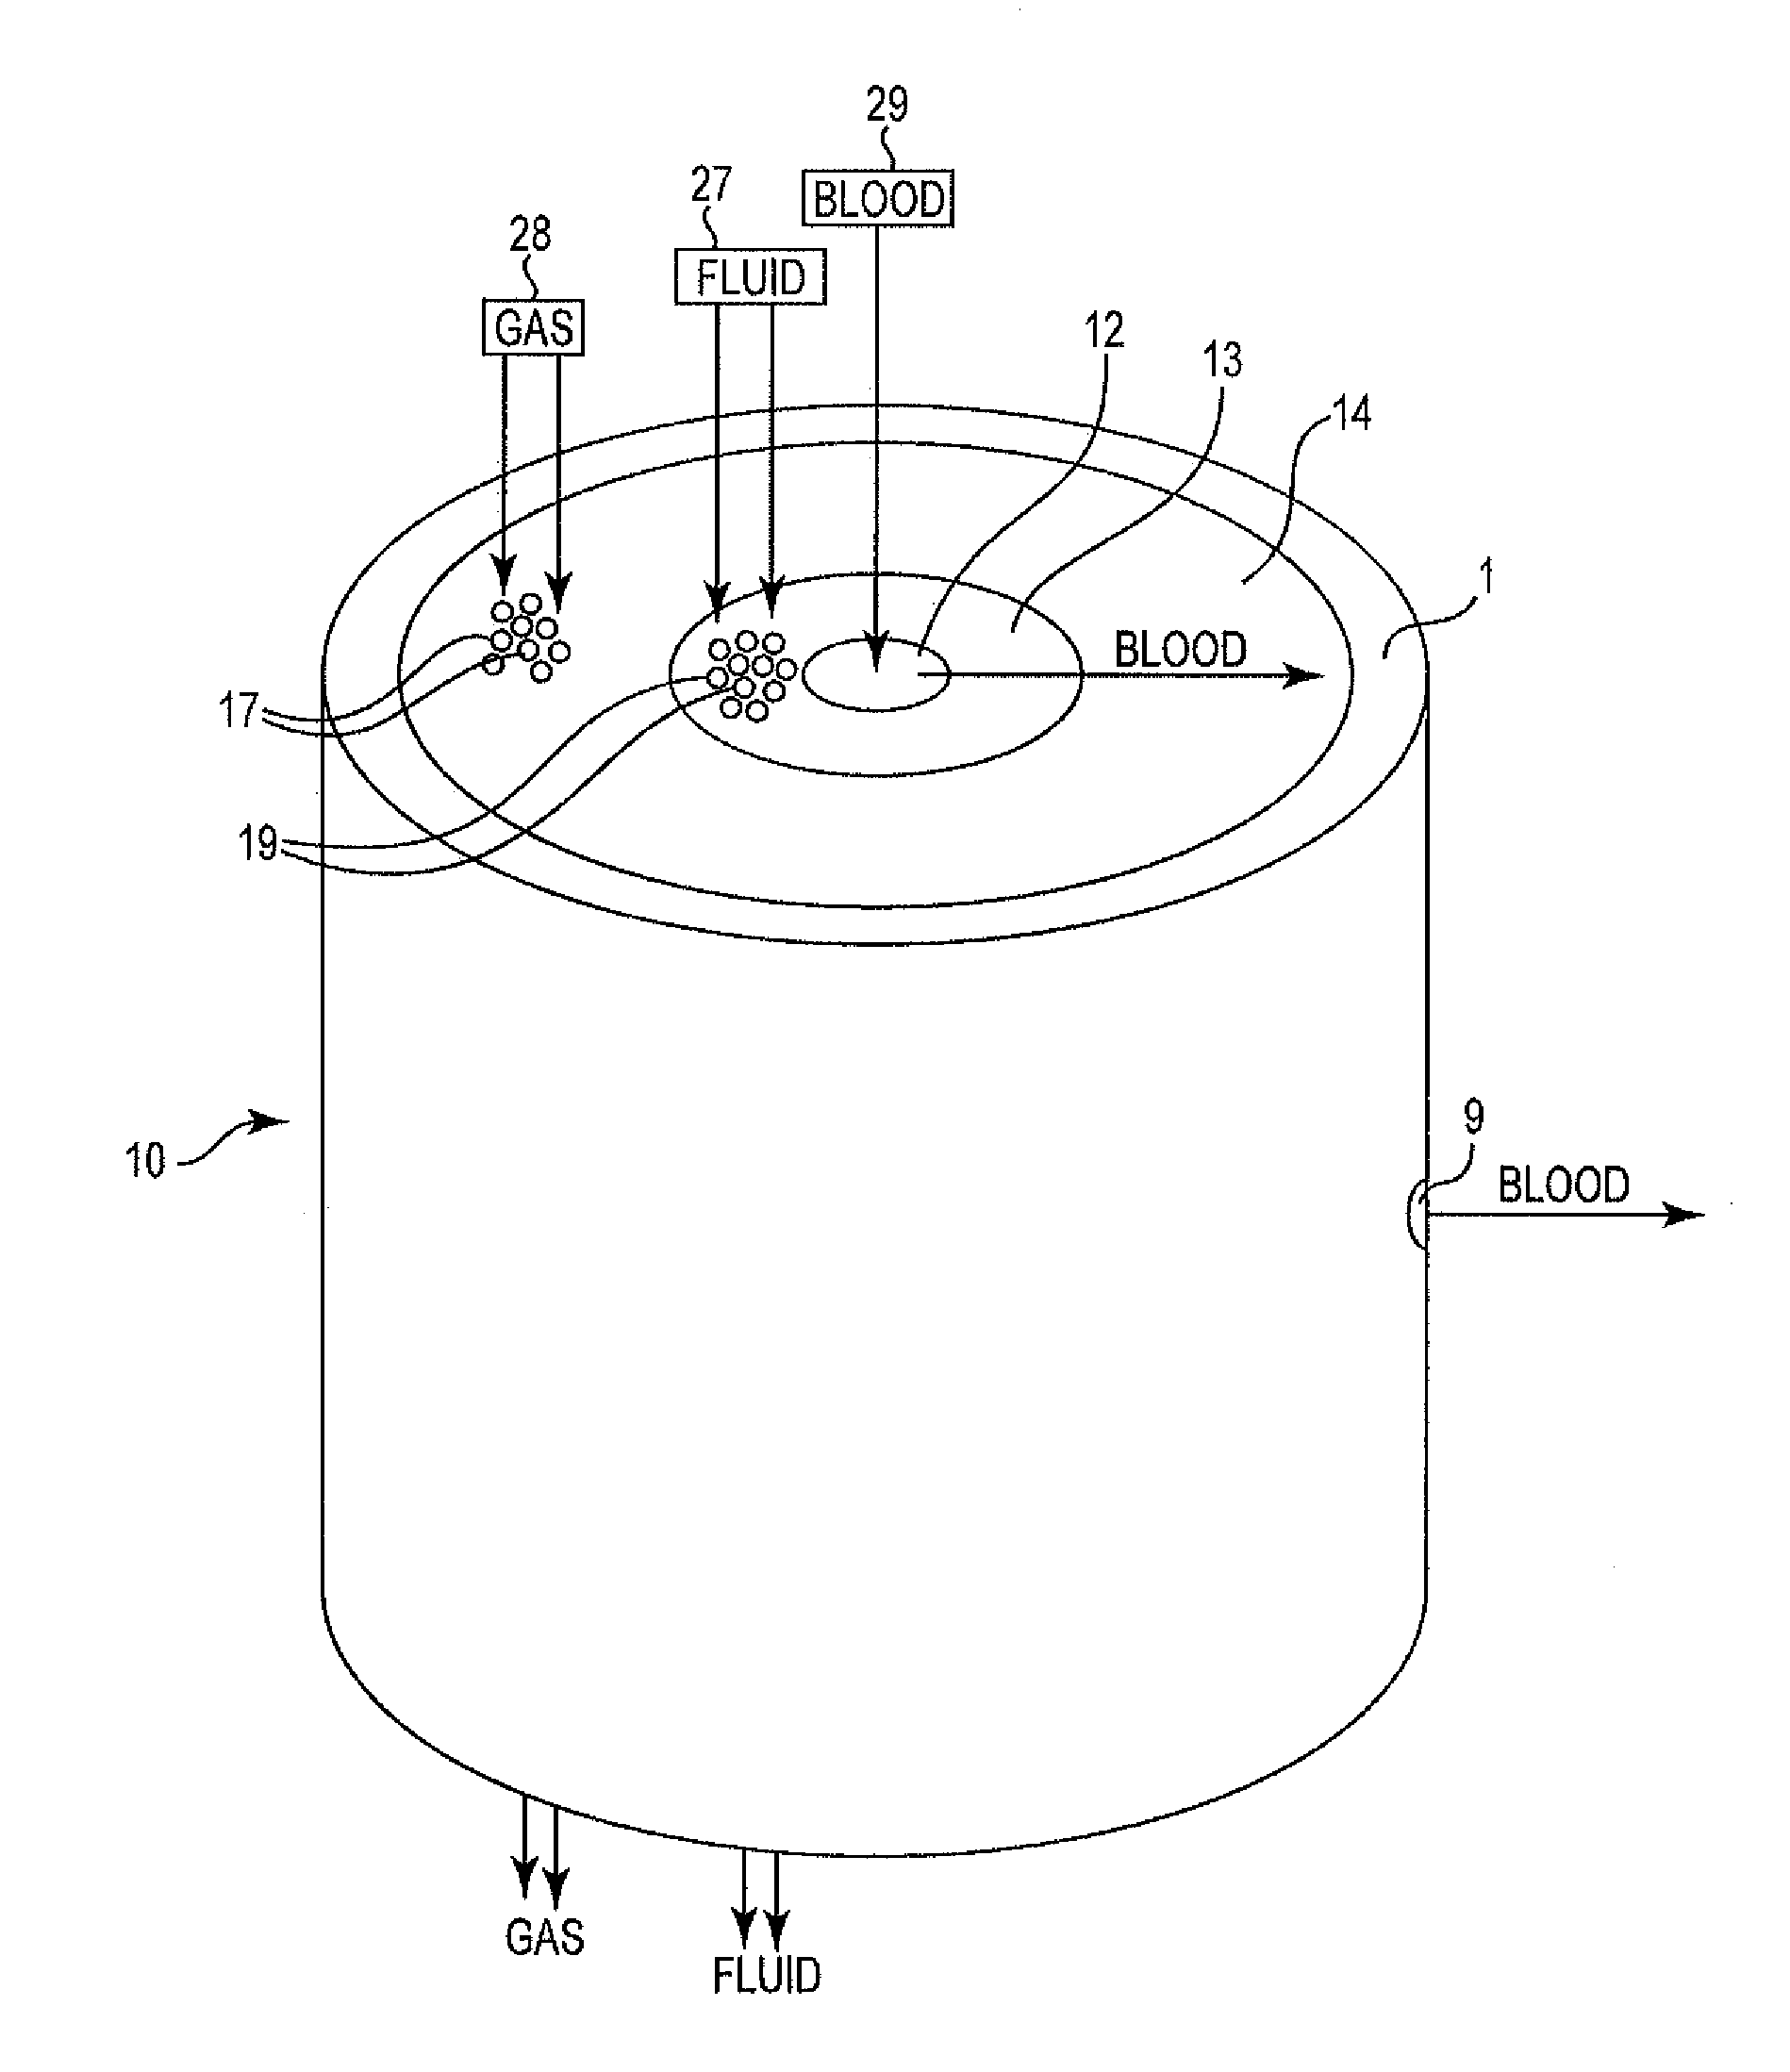 Method of making radial design oxygenator with heat exchanger